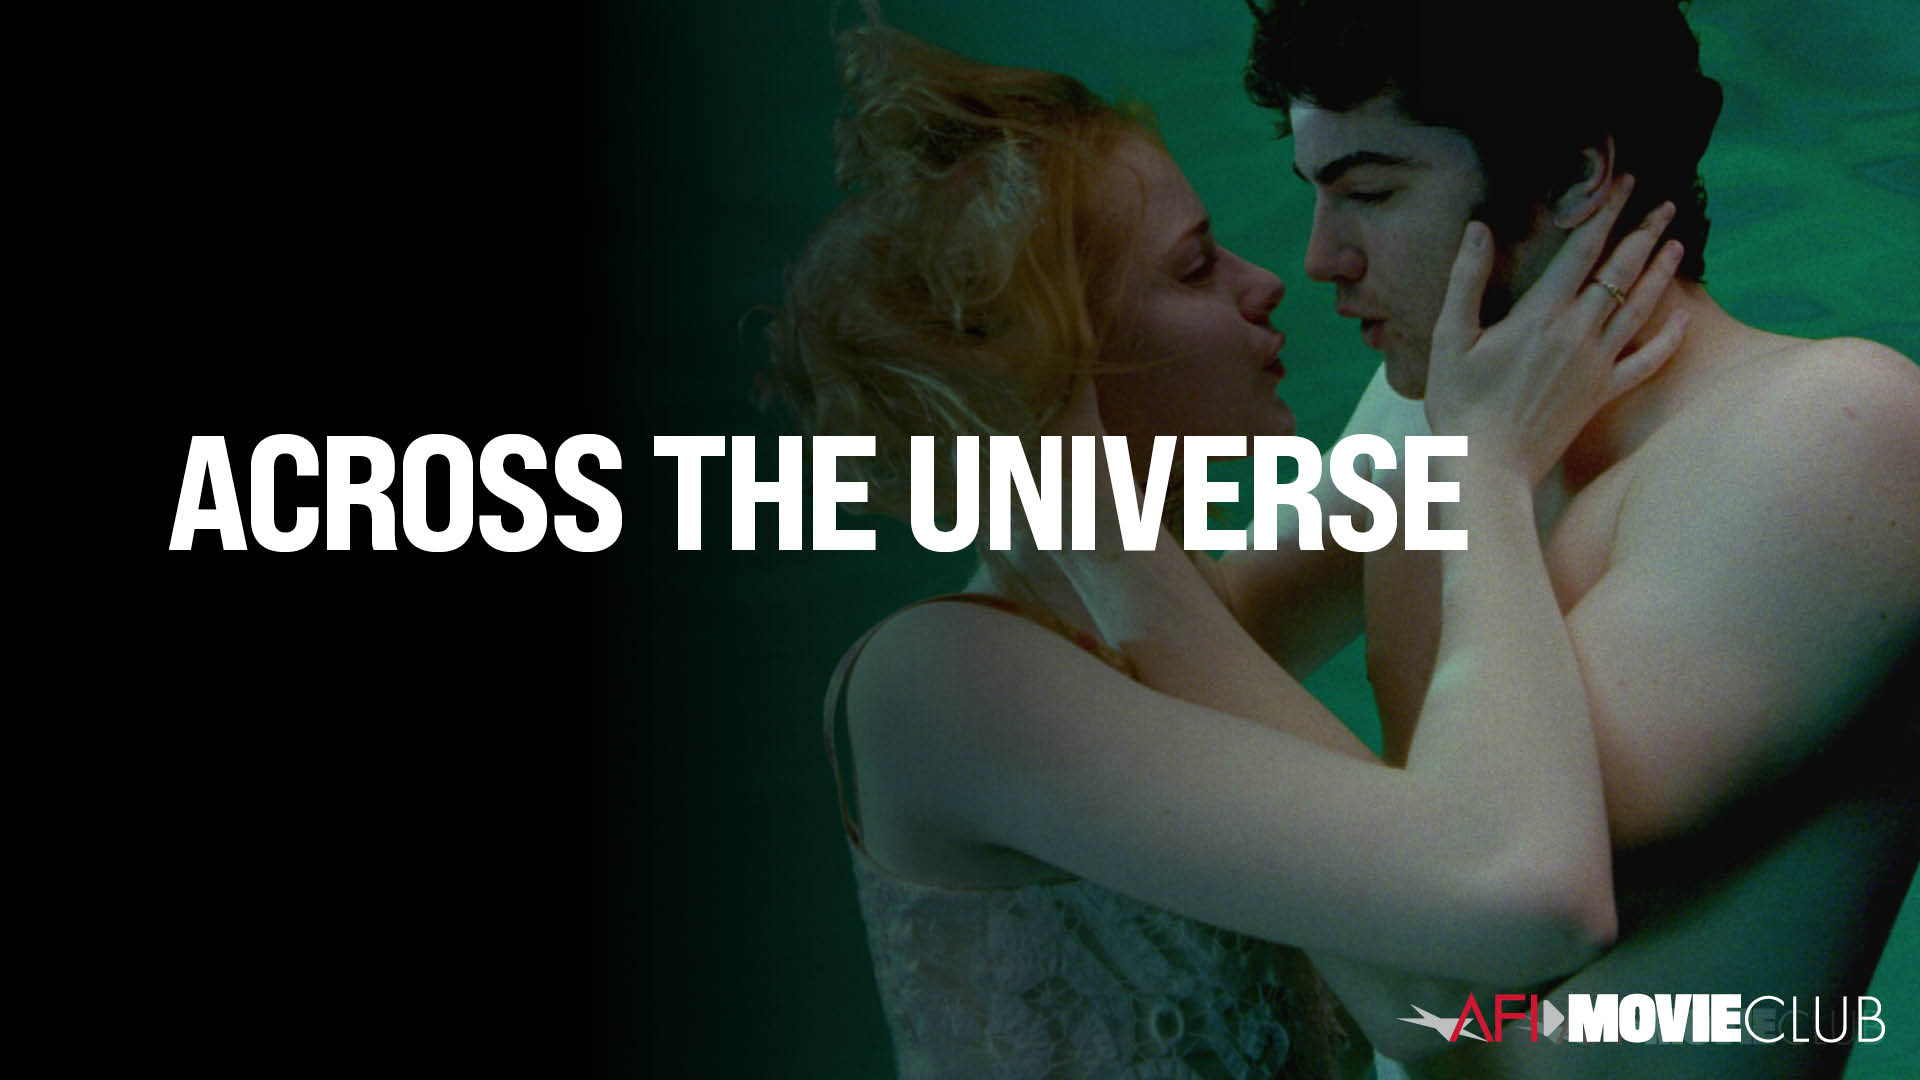 Across The Universe Film Still - Jim Sturgess and Evan Rachel Wood